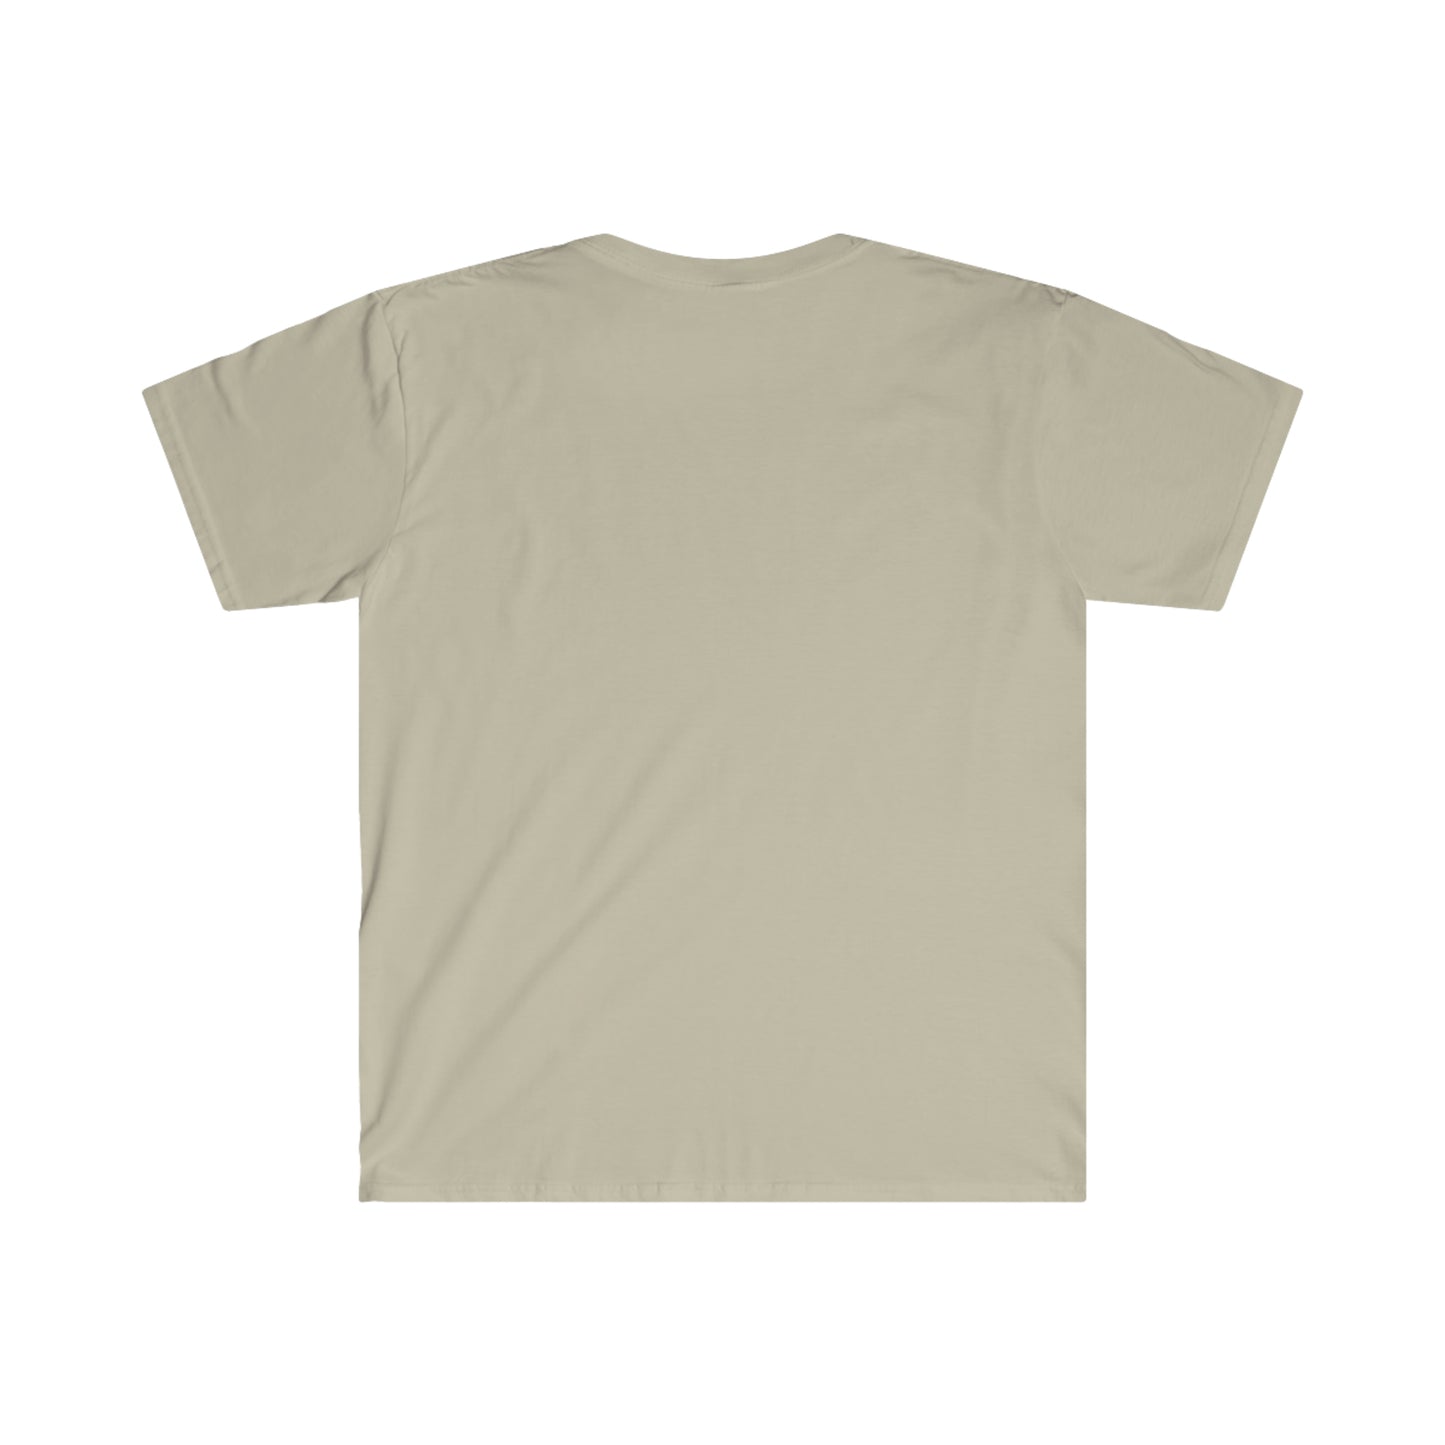 Honest [Redefined] Unisex Softstyle T-Shirt